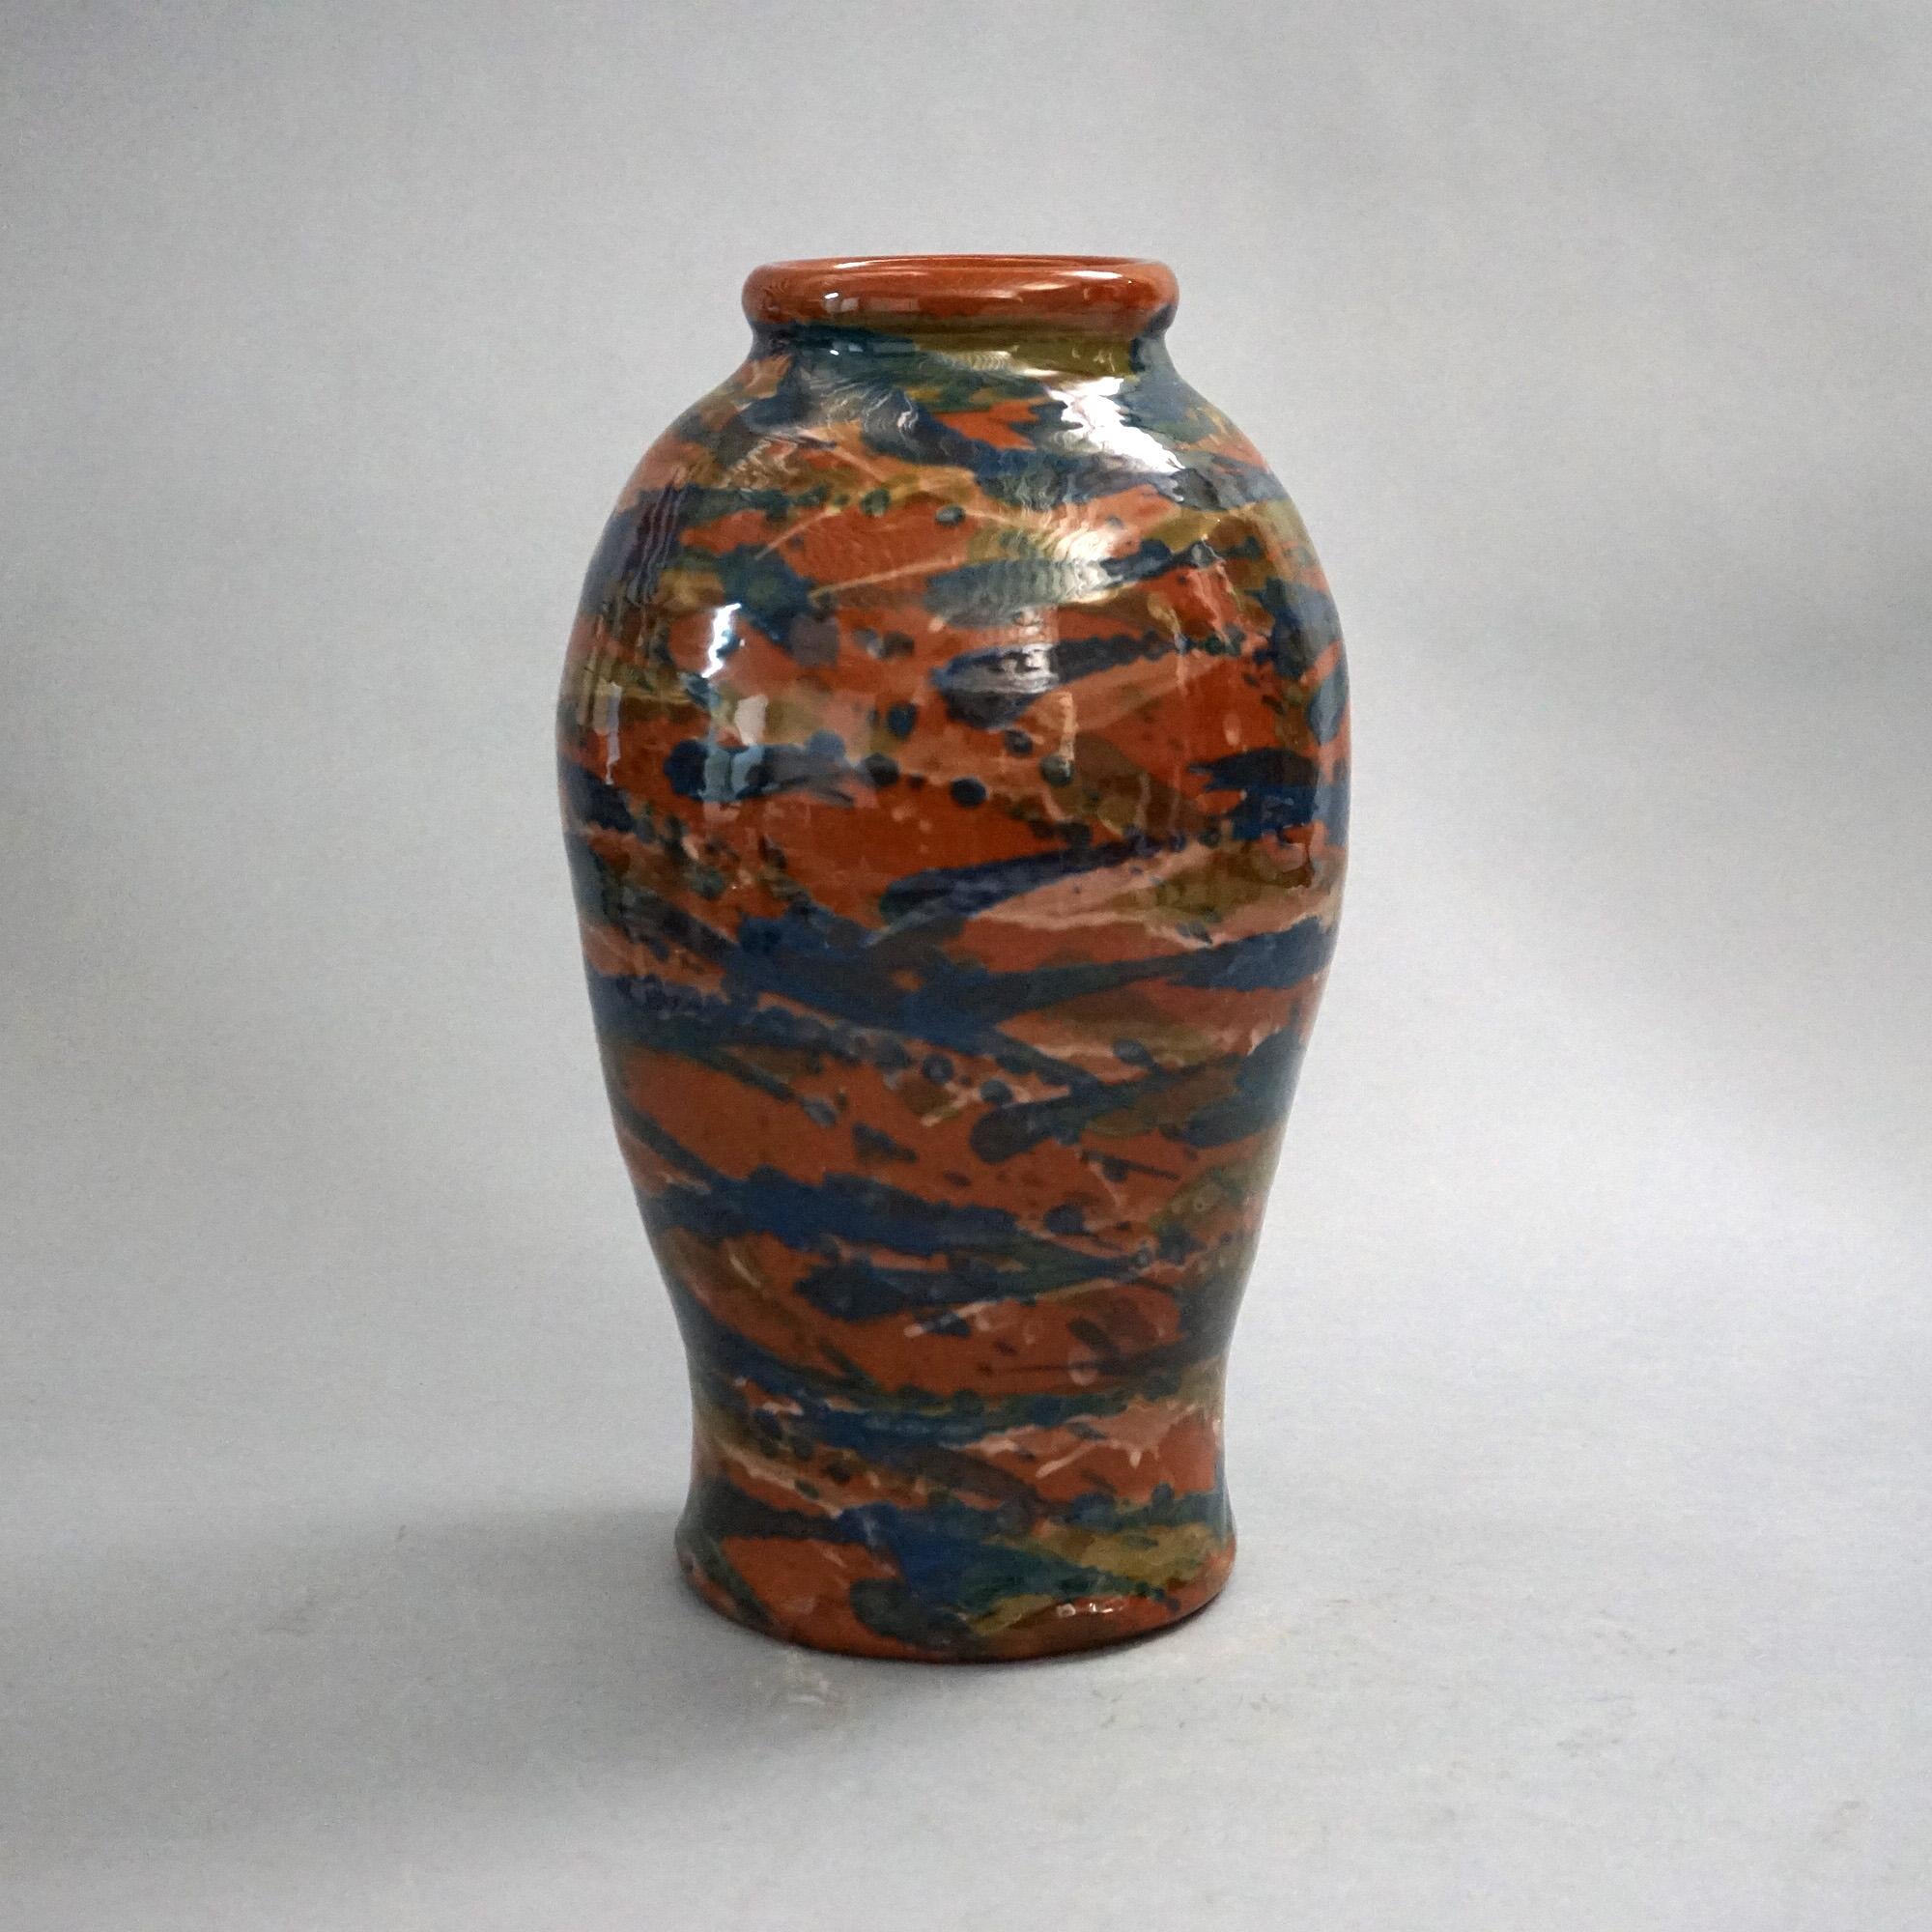 Antike mehrfarbige Bodenvase aus Keramik von Peters & Reed, um 1920

Maße - 17 